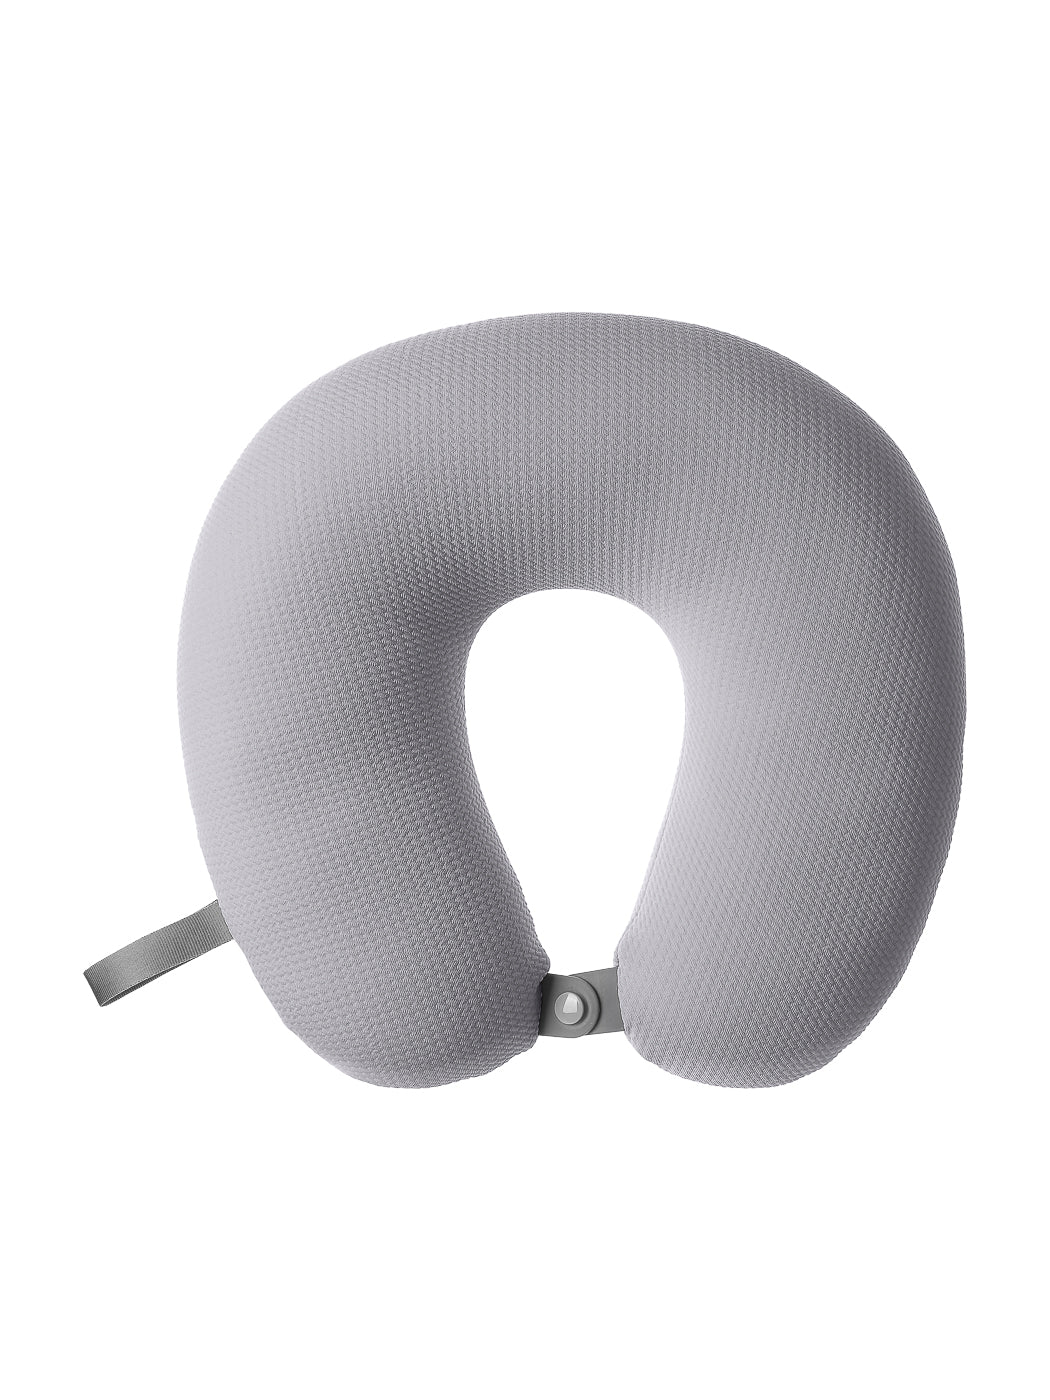 U-shaped Pillow(grey)